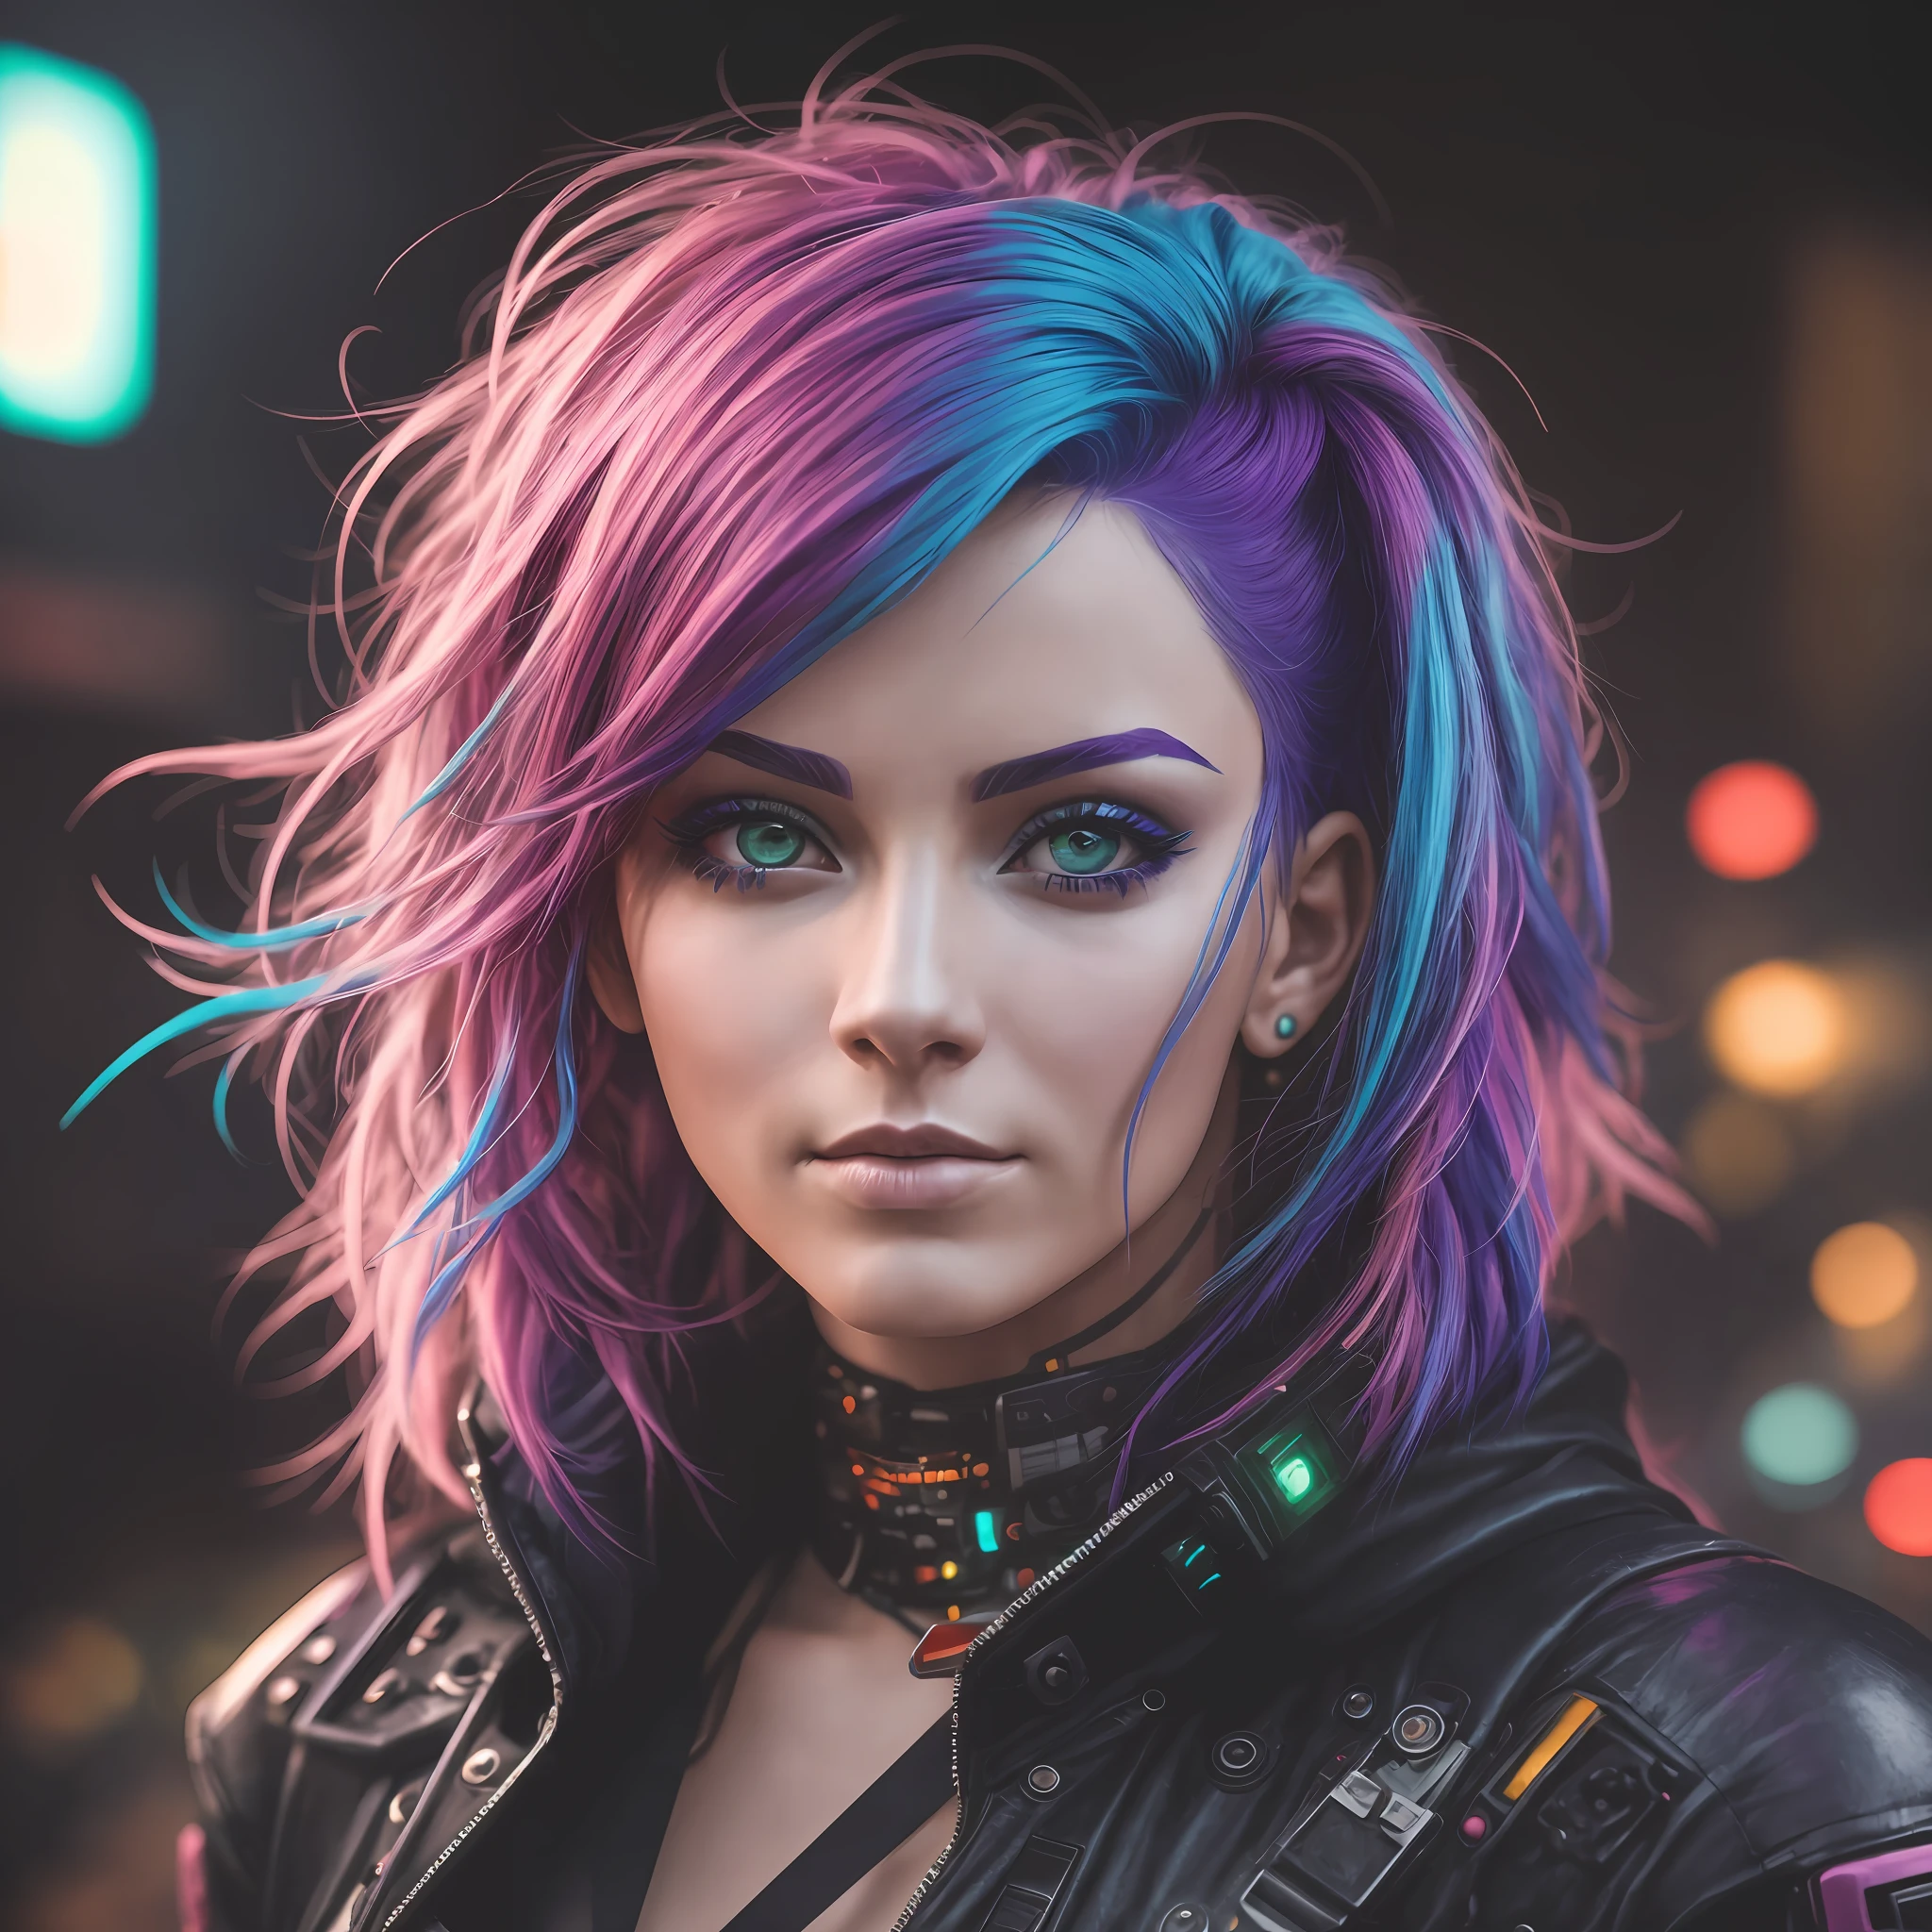 A woman with color에프ul hair style cyberpunk, sharp 에프acial 에프eatures, 영화 같은, 35mm 렌즈, 에프/1.8, 하이라이트 조명, 전역 조명 –uplight –v 4 -imagine --auto --s2